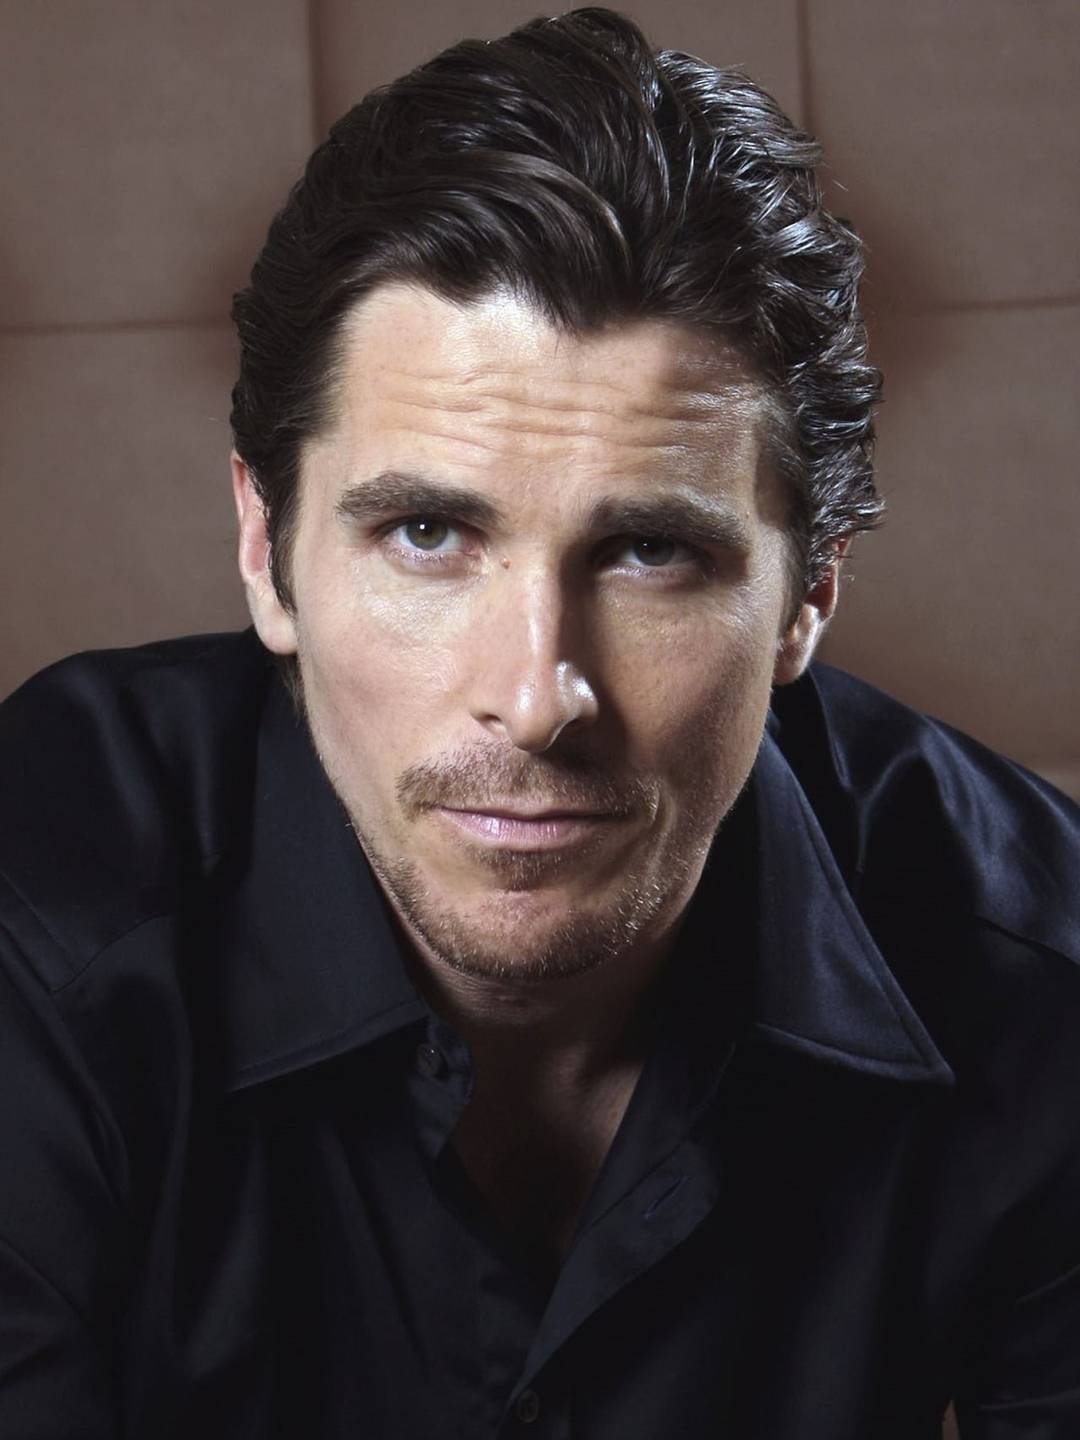 Christian Bale main achievements